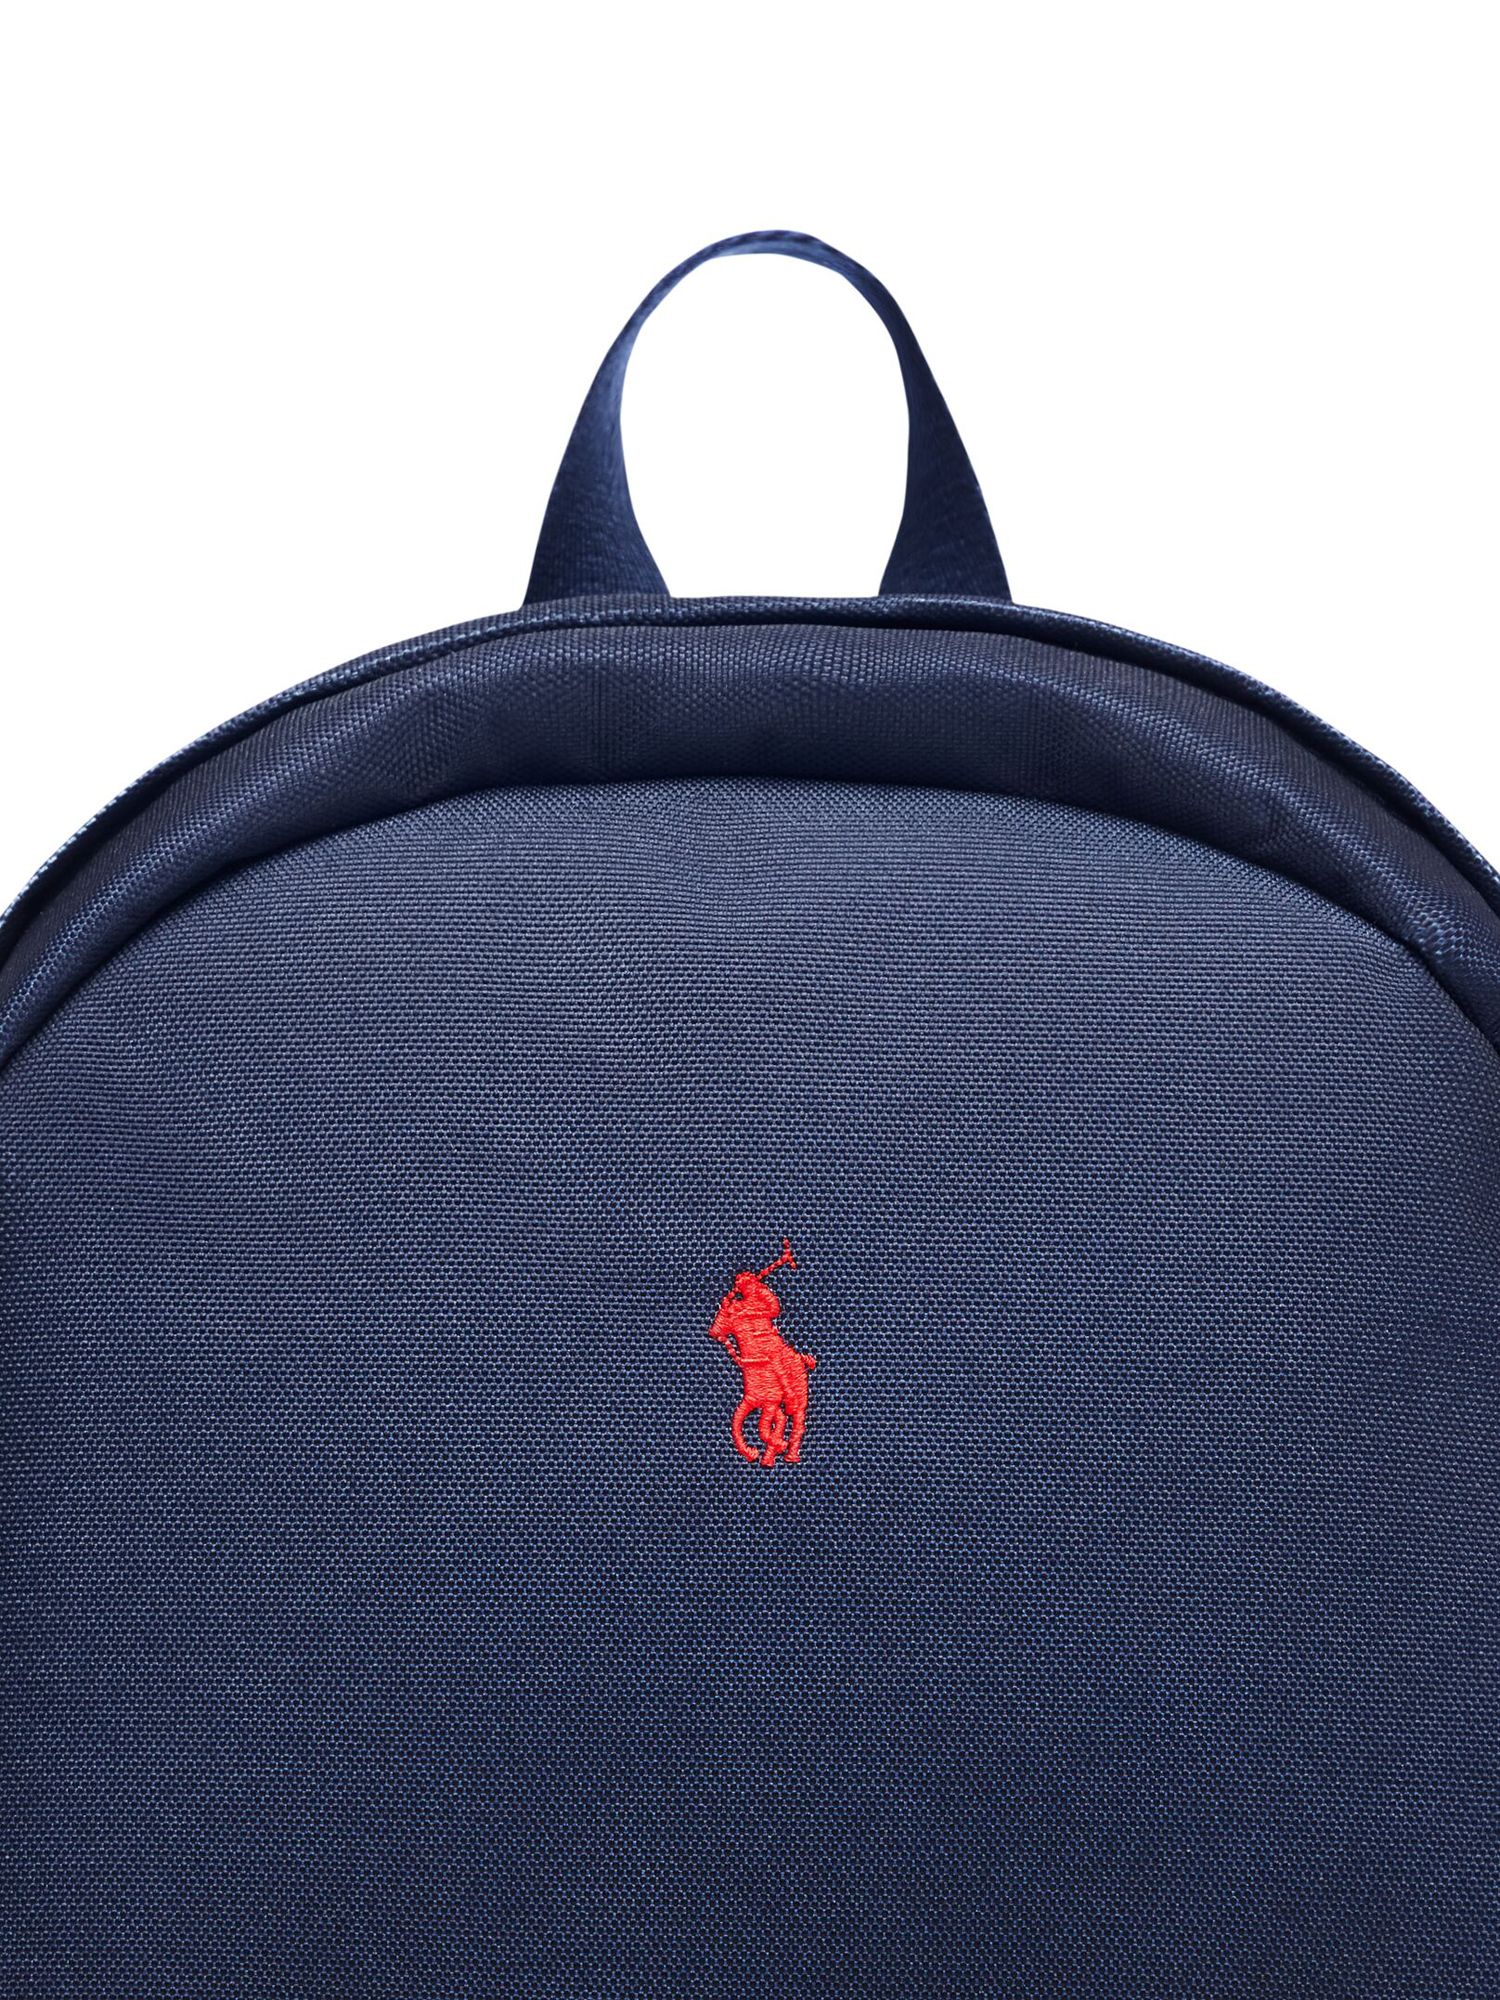 Polo Ralph Lauren Kids' Polo Logo Backpack, Navy